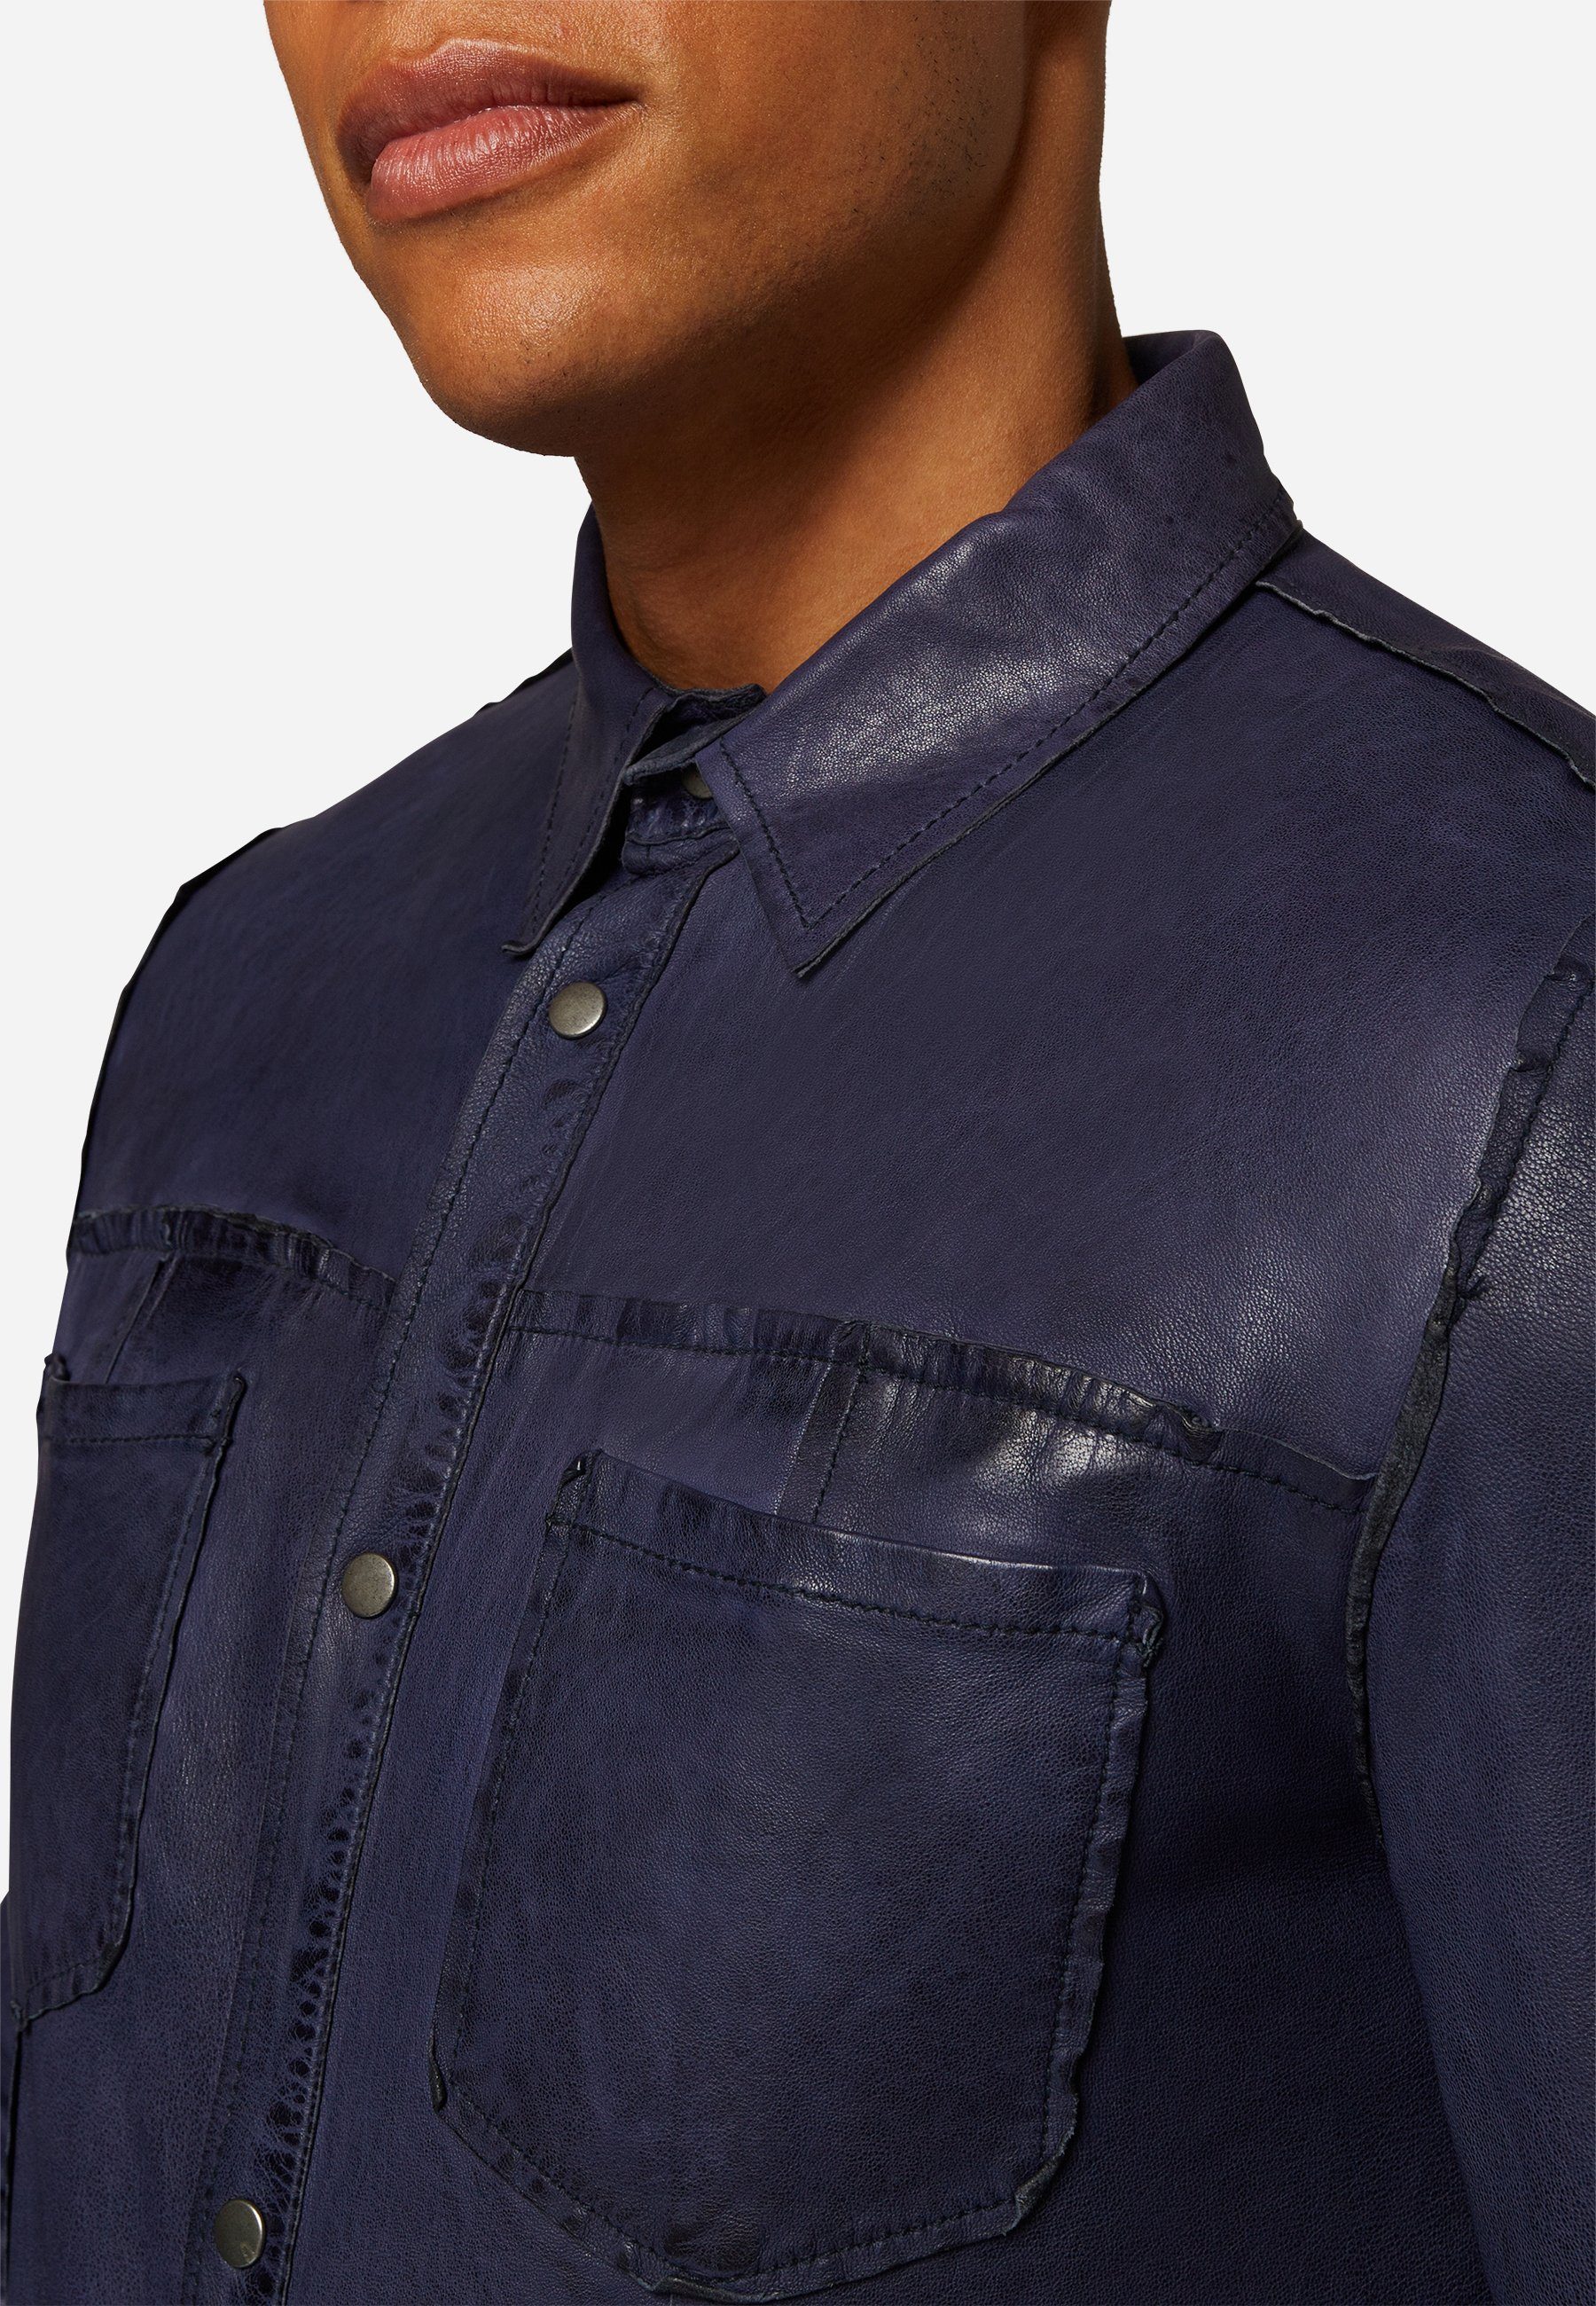 - Beidseitig Wendbar Hochwertiges Lamm Leder, 2-in-1-Langarmshirt tragbar Blau RICANO Shirt Navy Reverse